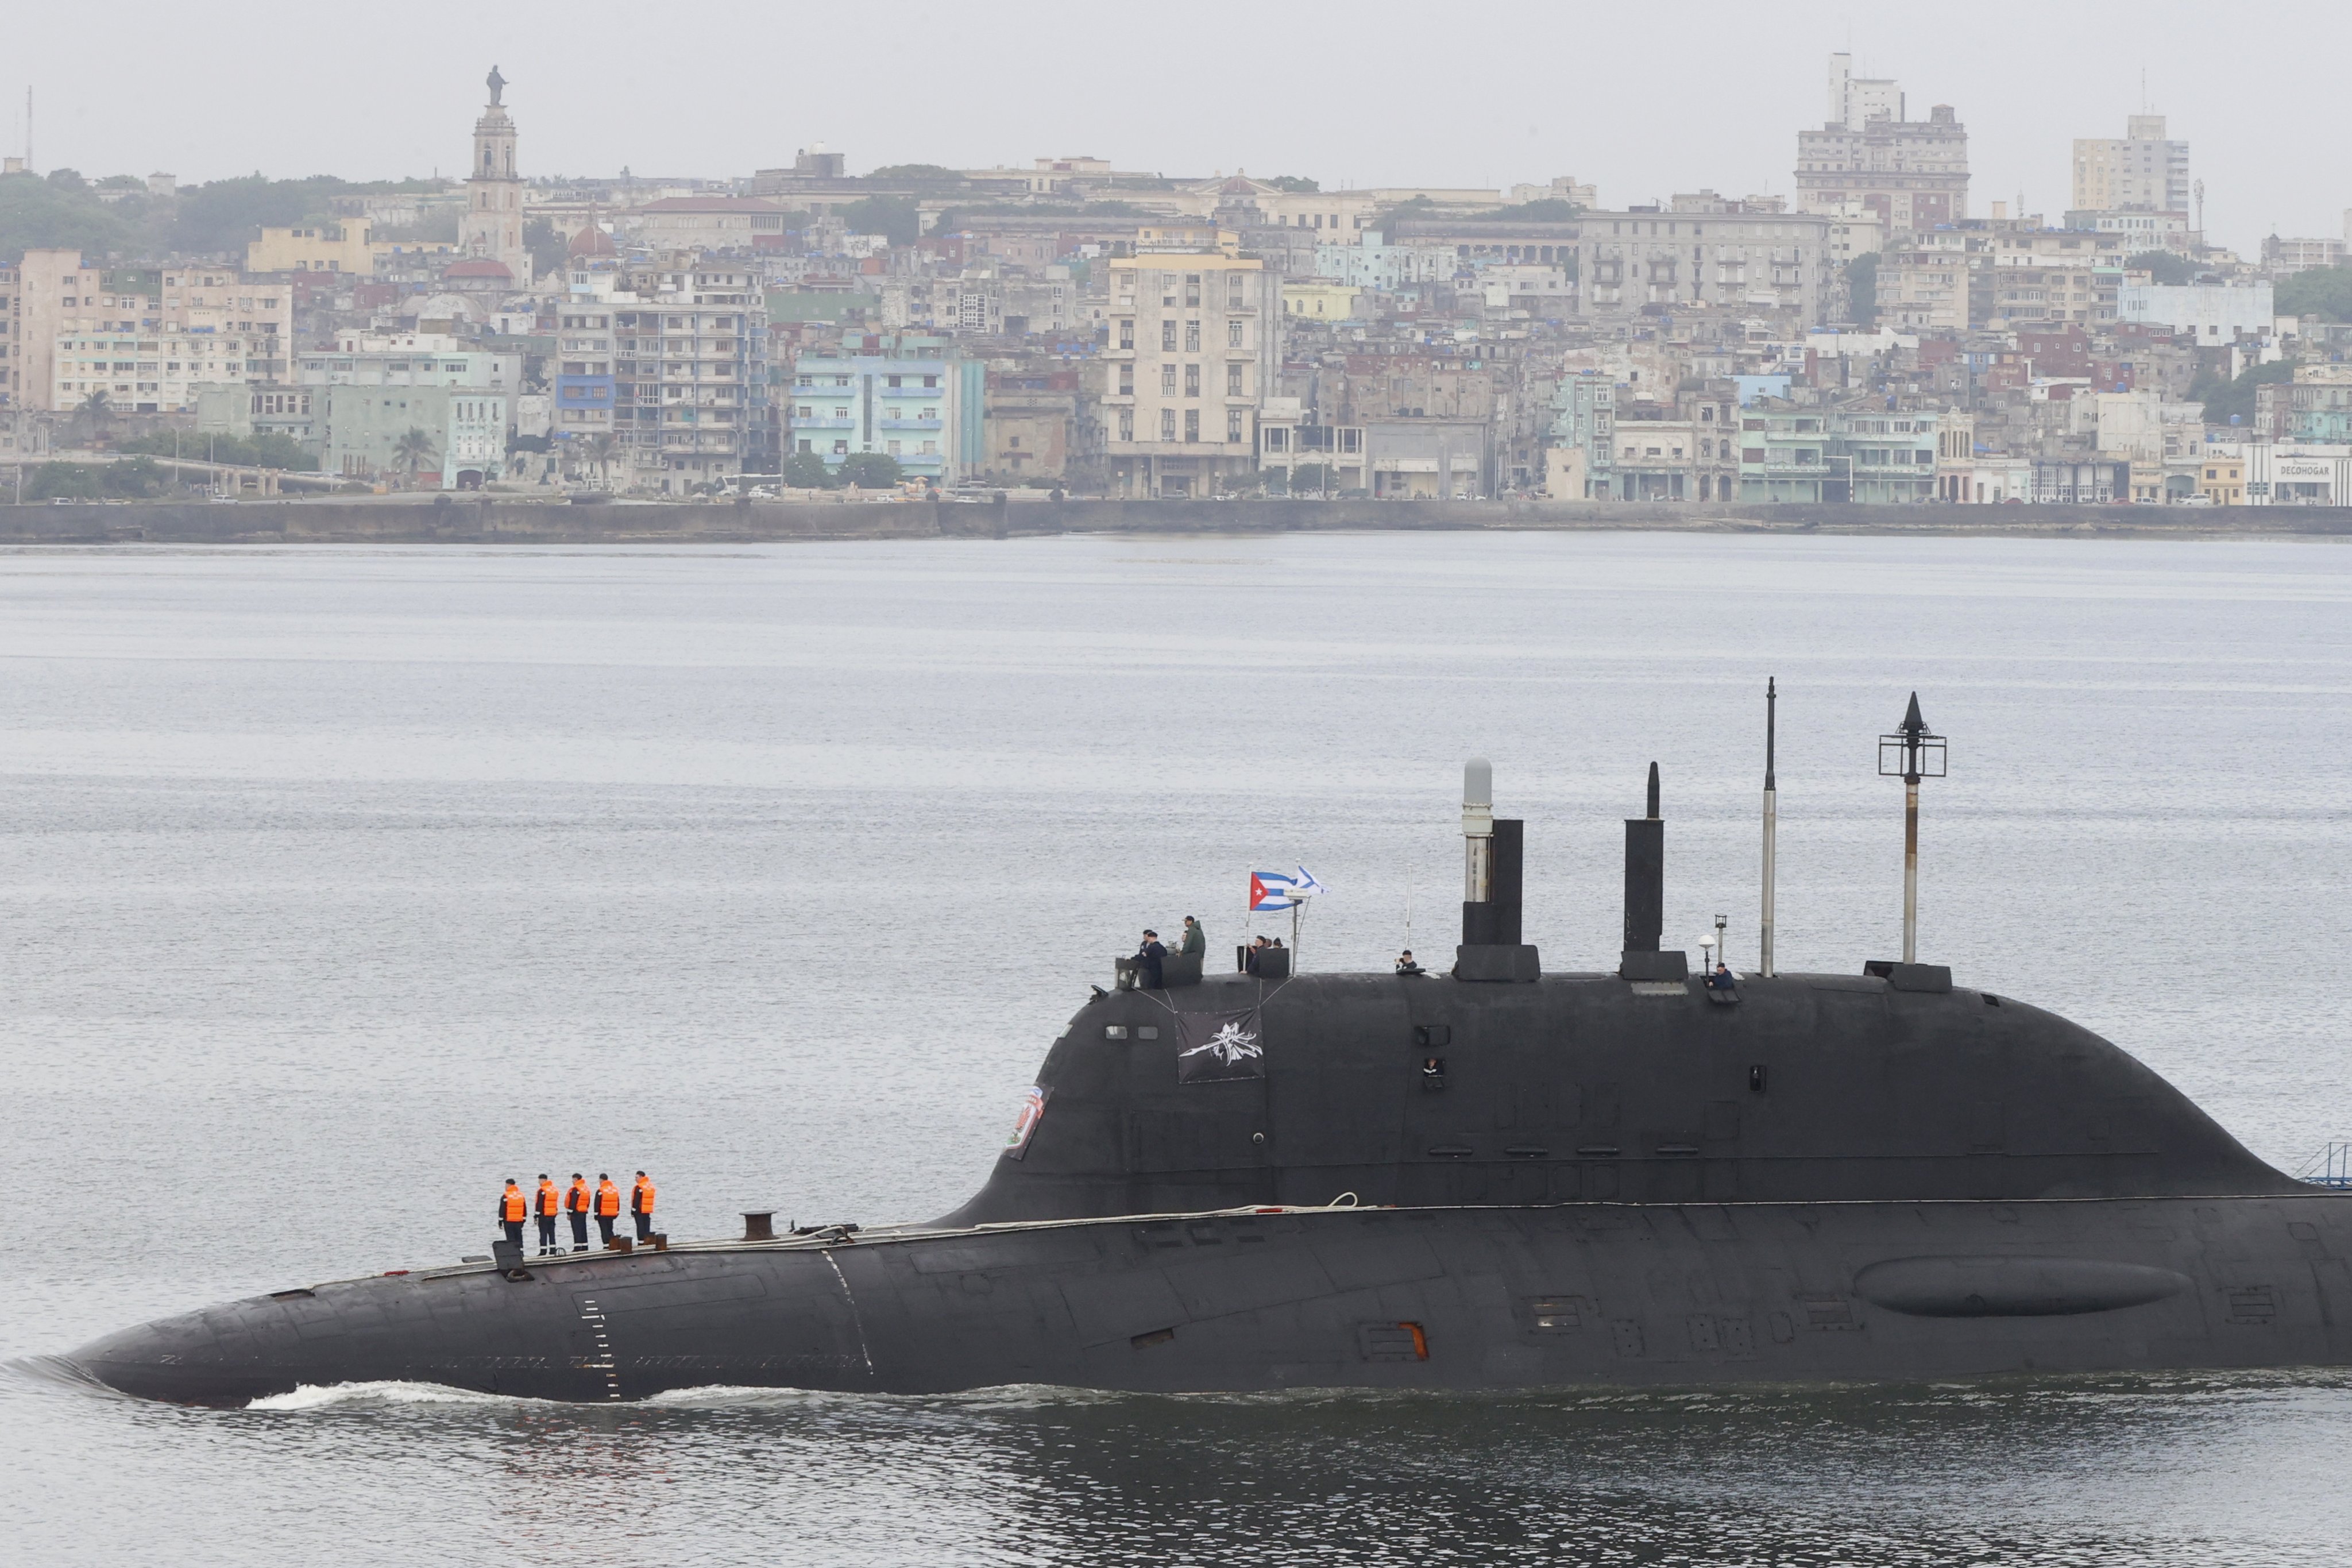 The Russian Navy’s Kazan nuclear submarine arrives in Havana, Cuba, on Wednesday. Photo: EPA-EFE